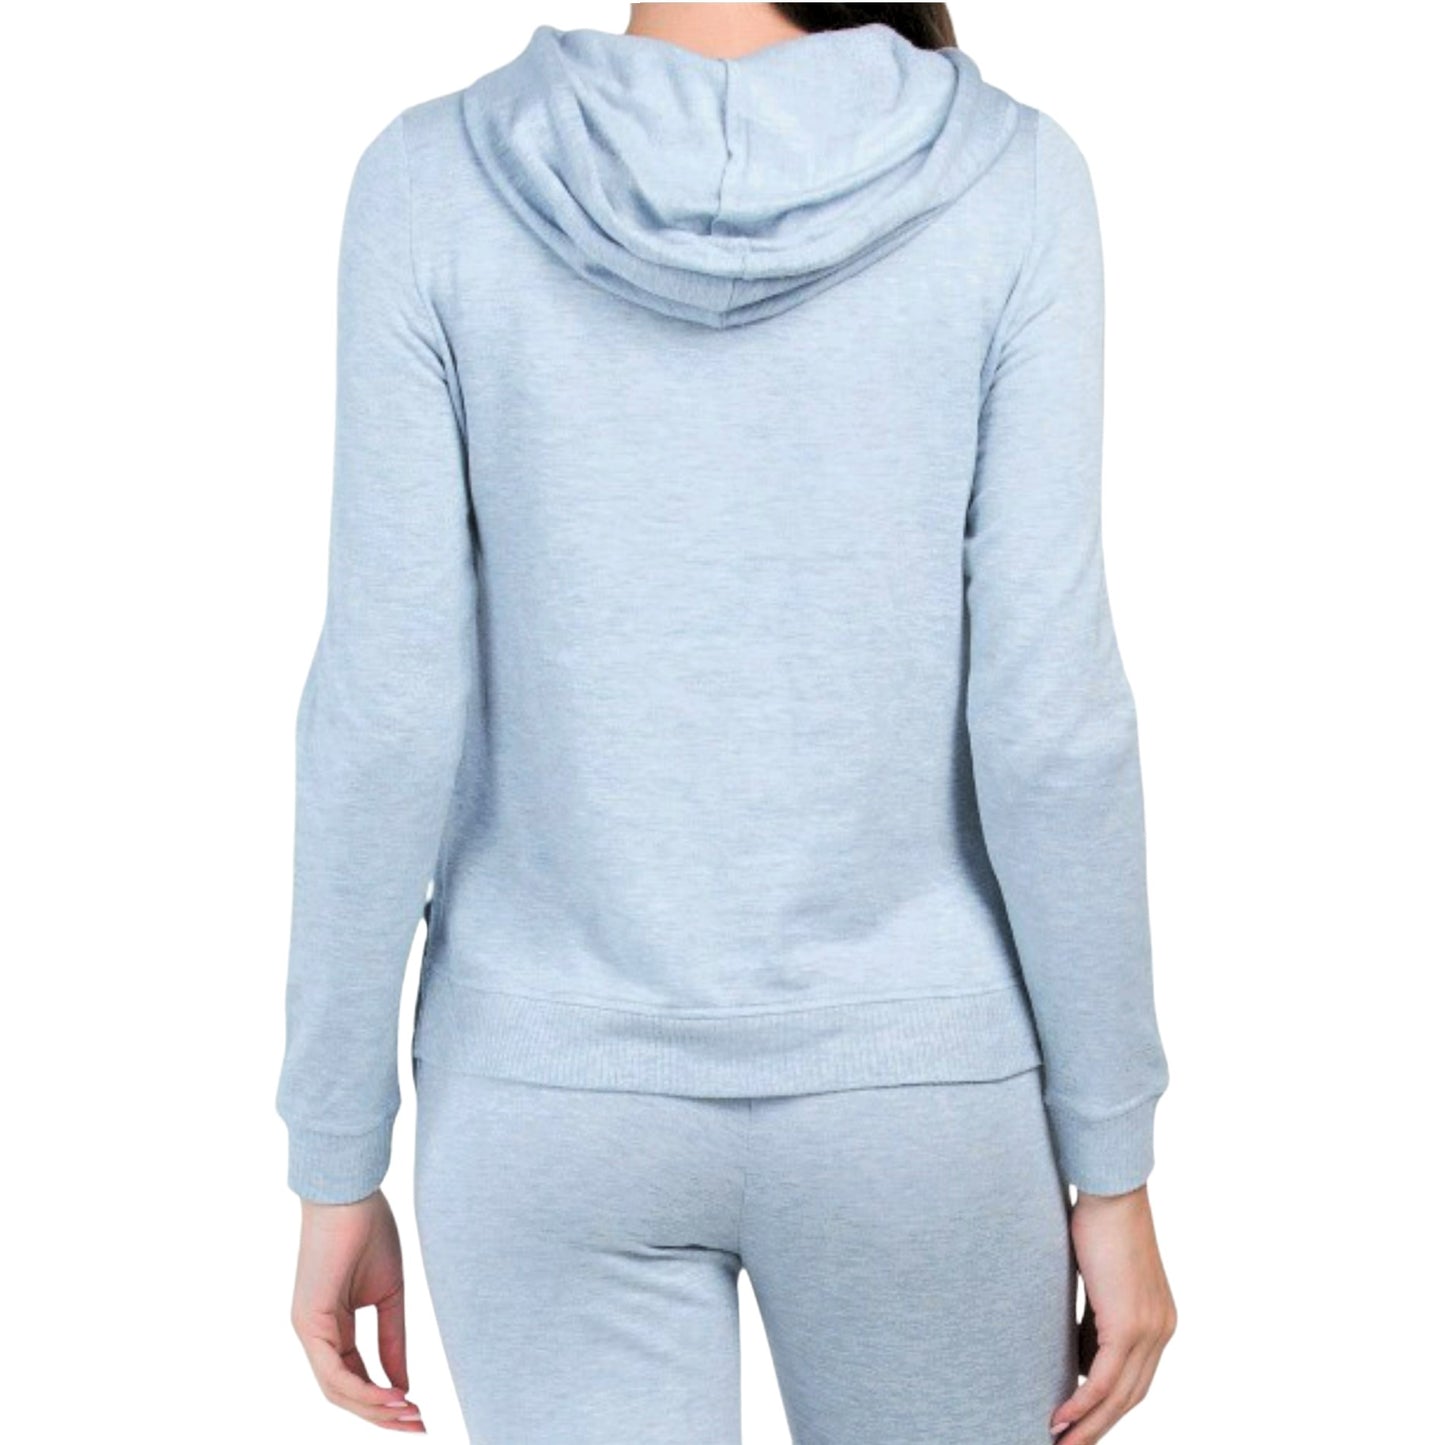 Peyton Primrose Women's Metallic Star Graphic Print Soft Sweatshirt Pullover Hoodie